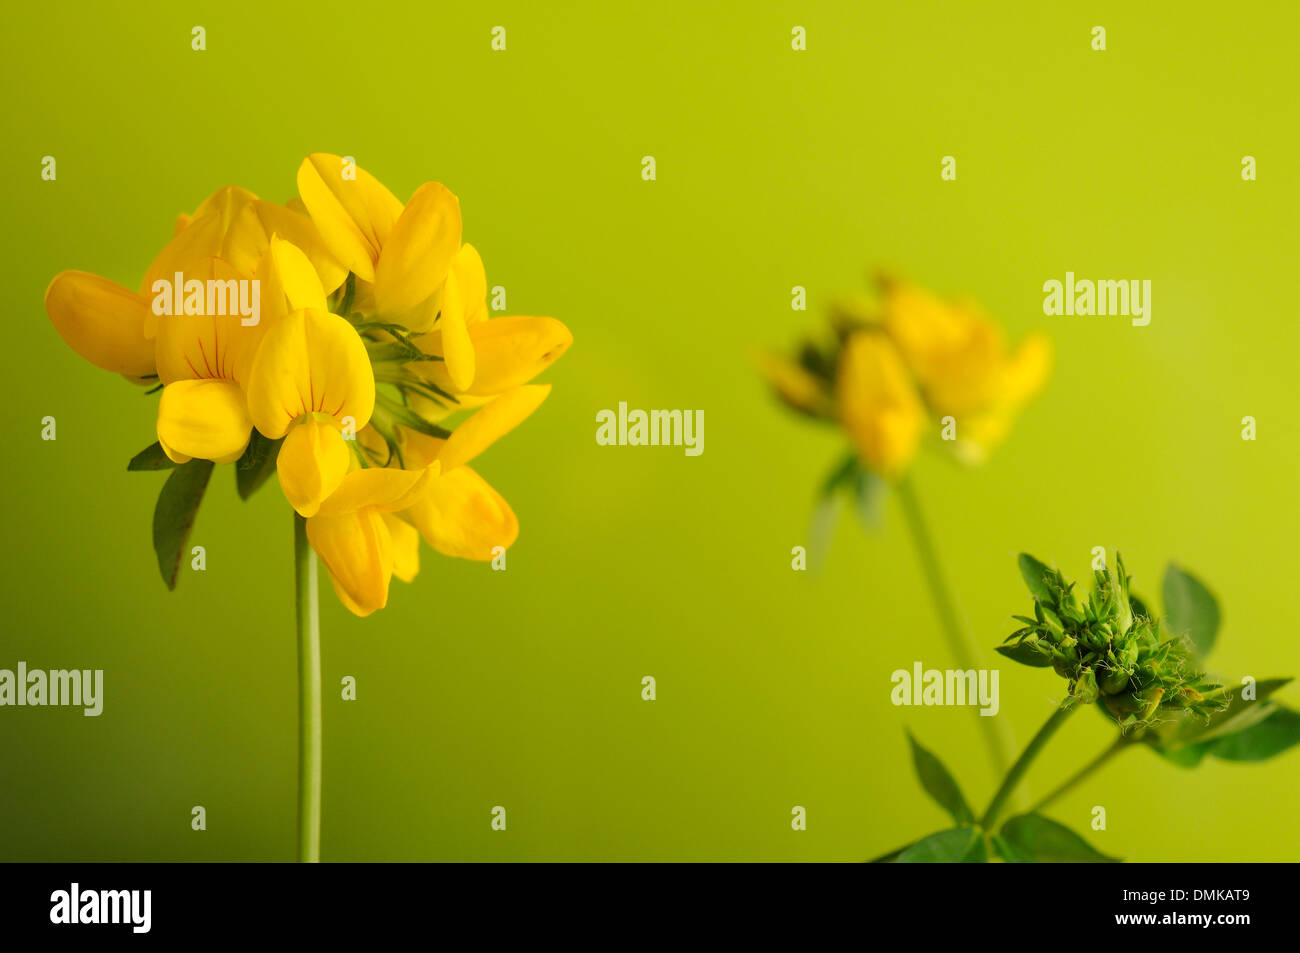 Birdfoot deervetch, Lotus corniculatus, horizontal portrait of yellow flowers with nice outfocus background. Stock Photo